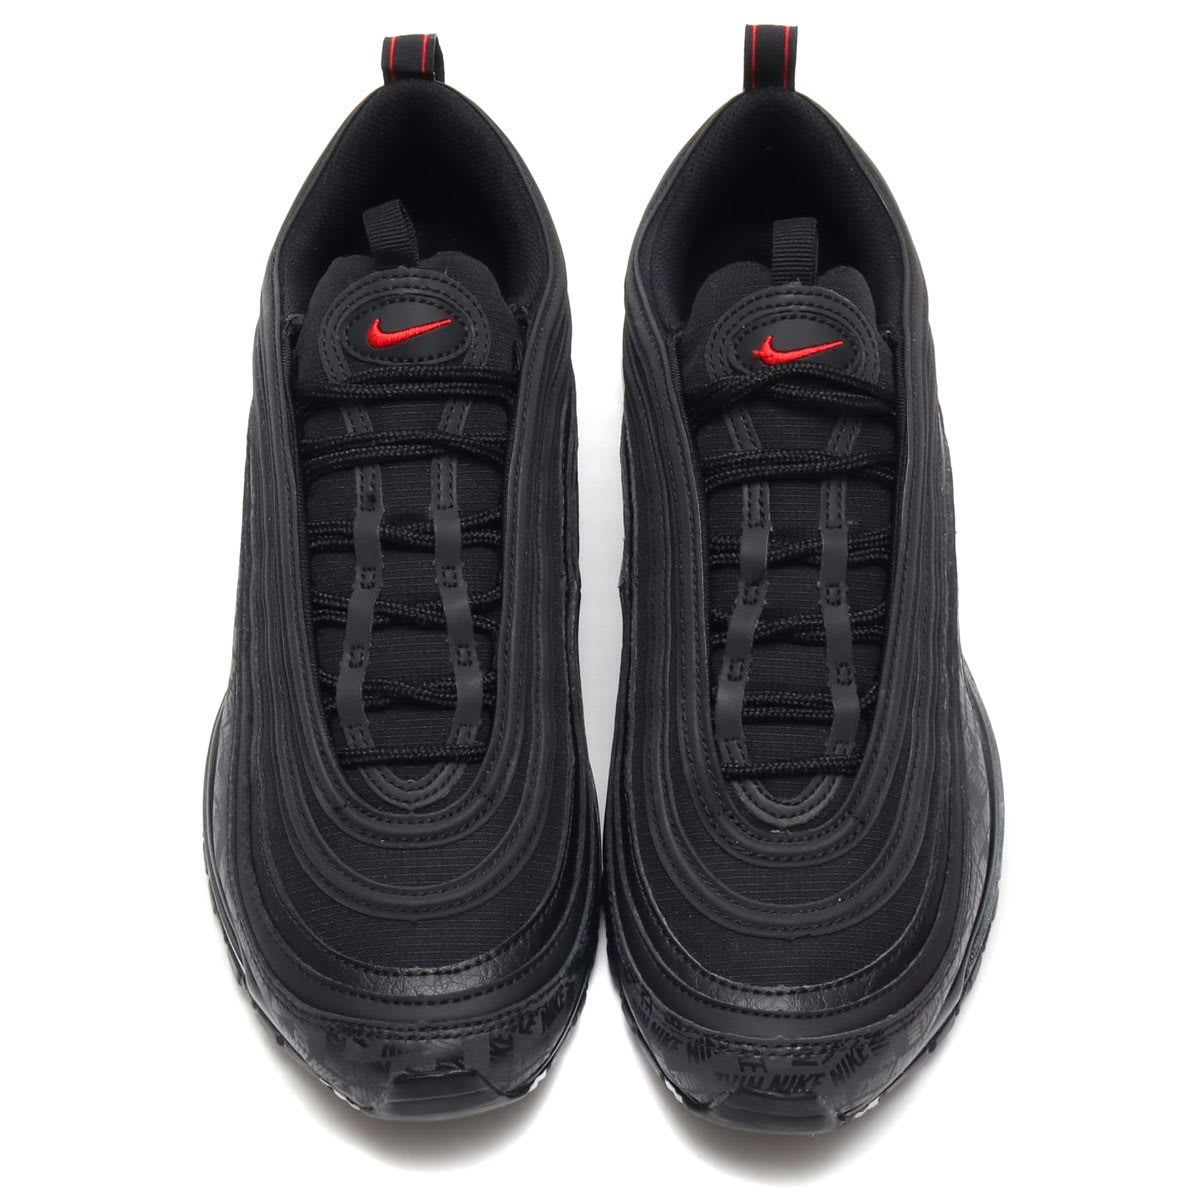 Nike Air Max 97 Black/University Red-Black AR4259-001 (Top)